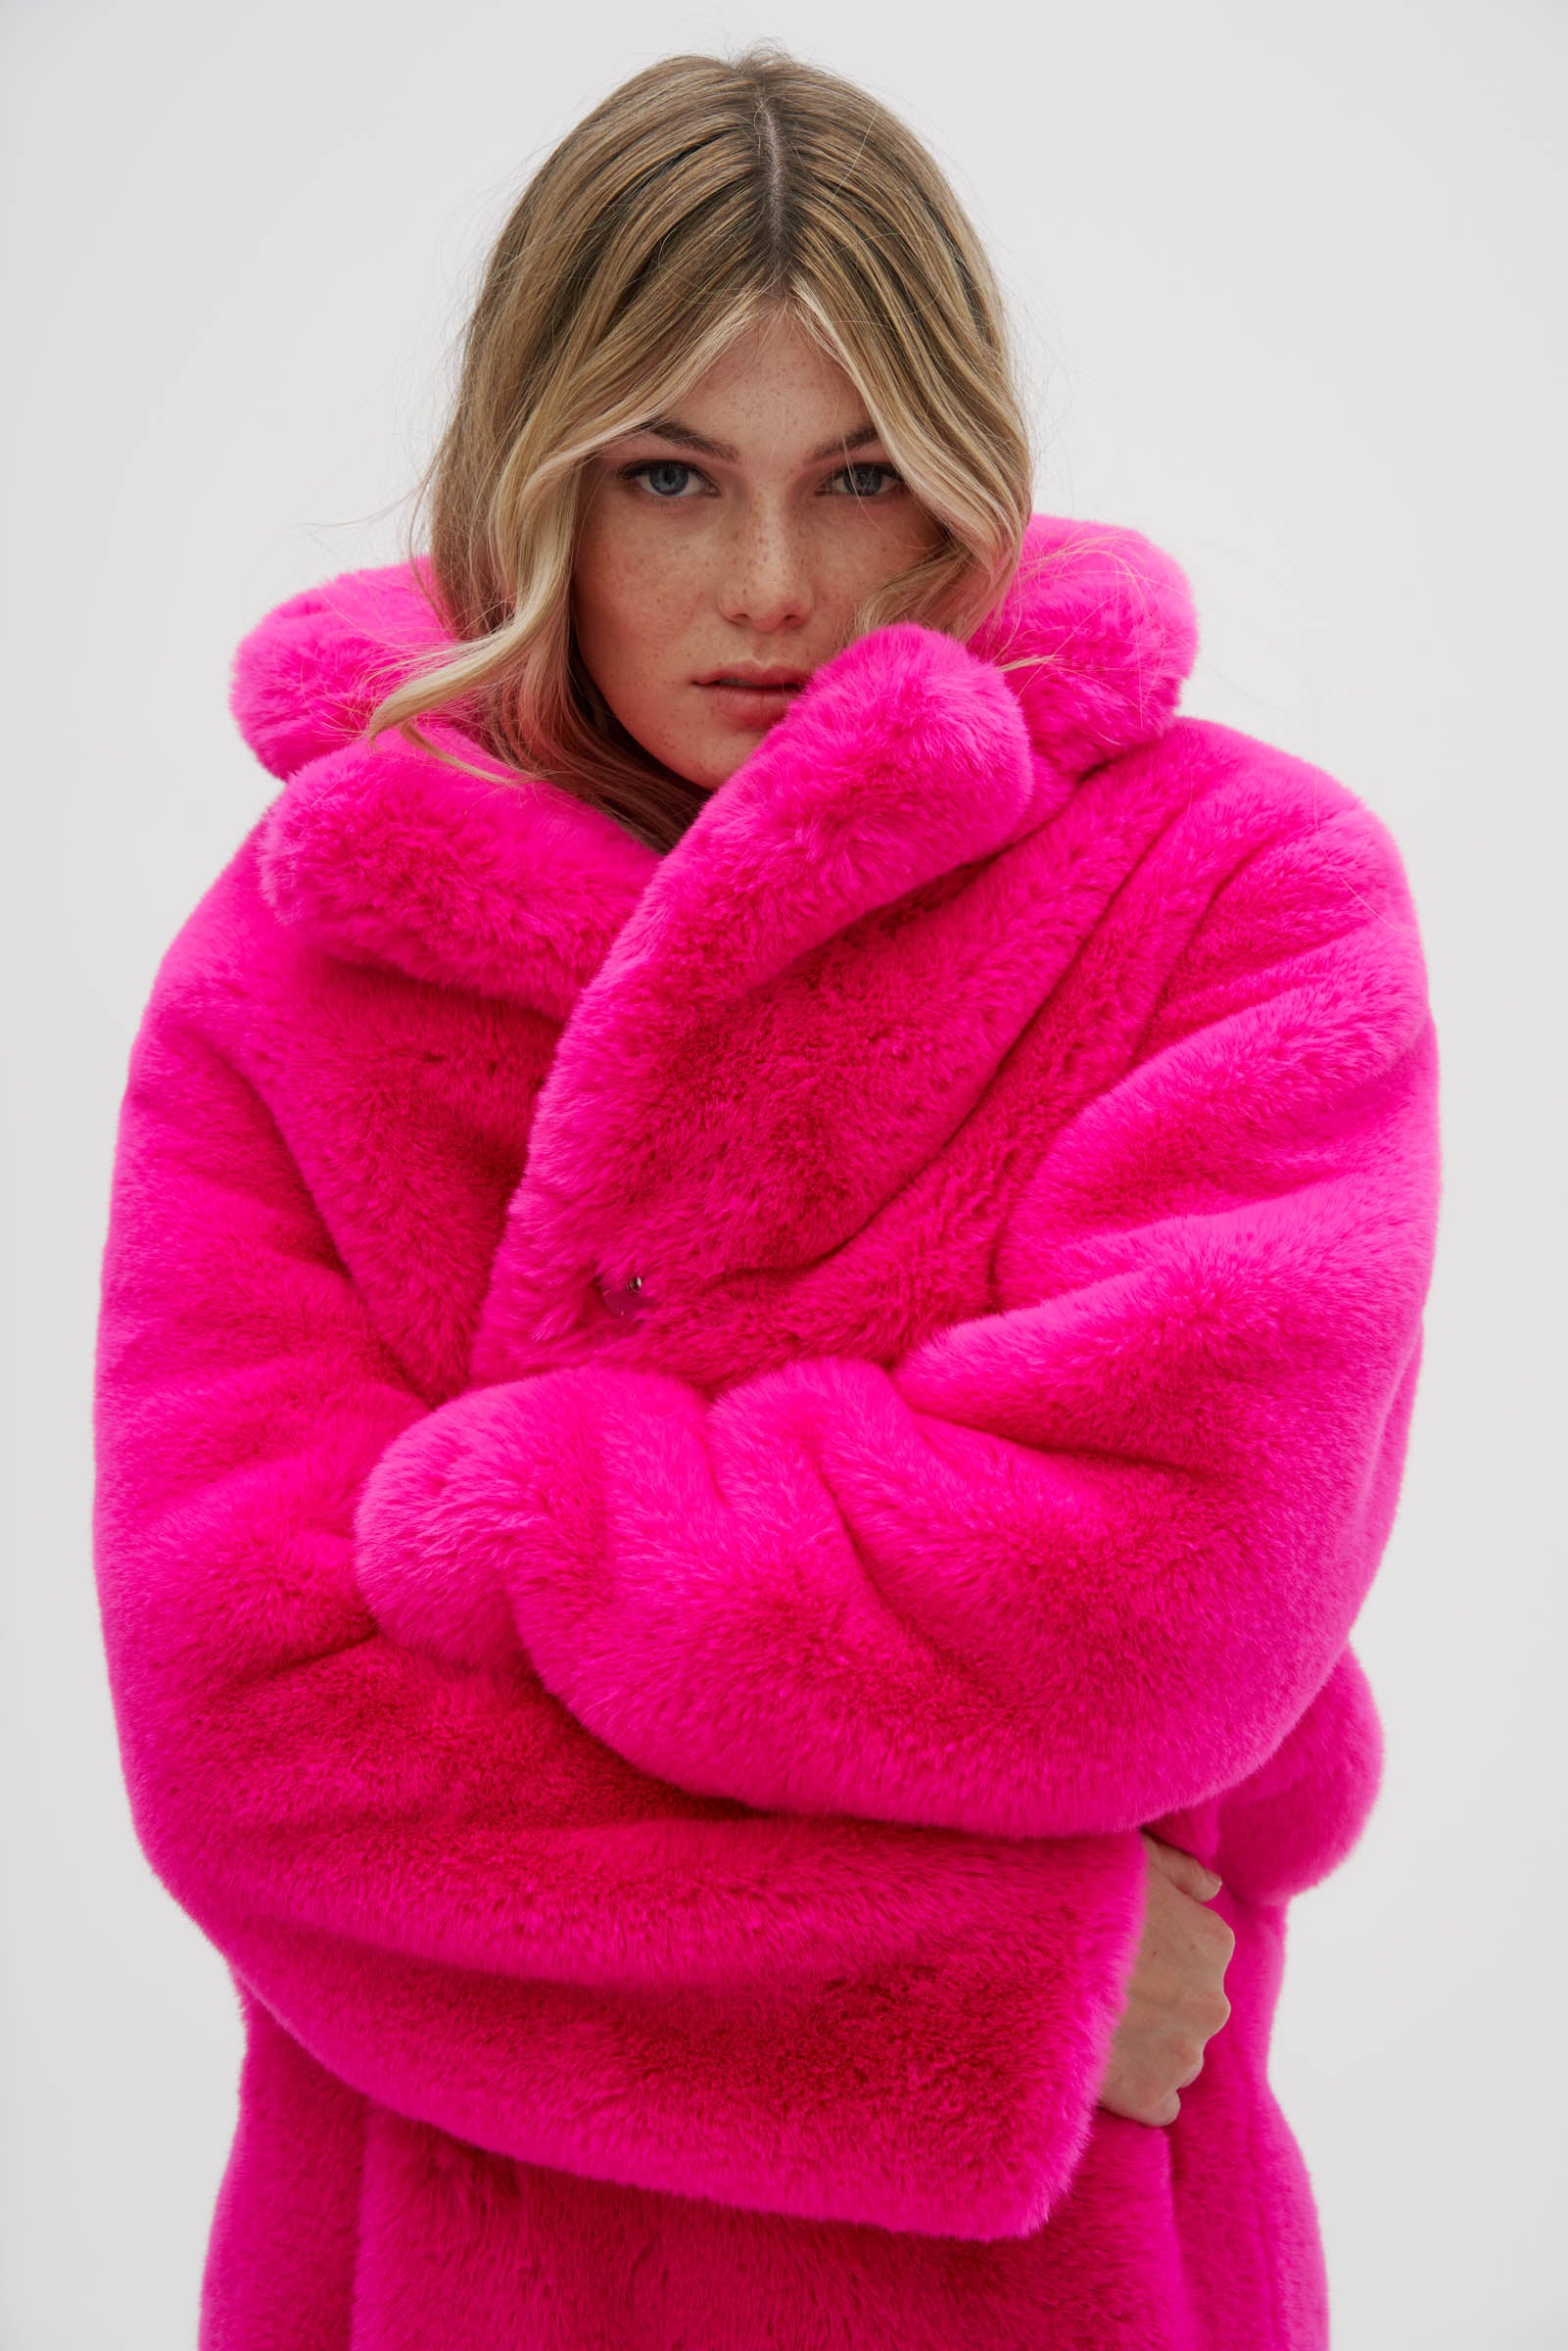 Faux fur coat - Woman